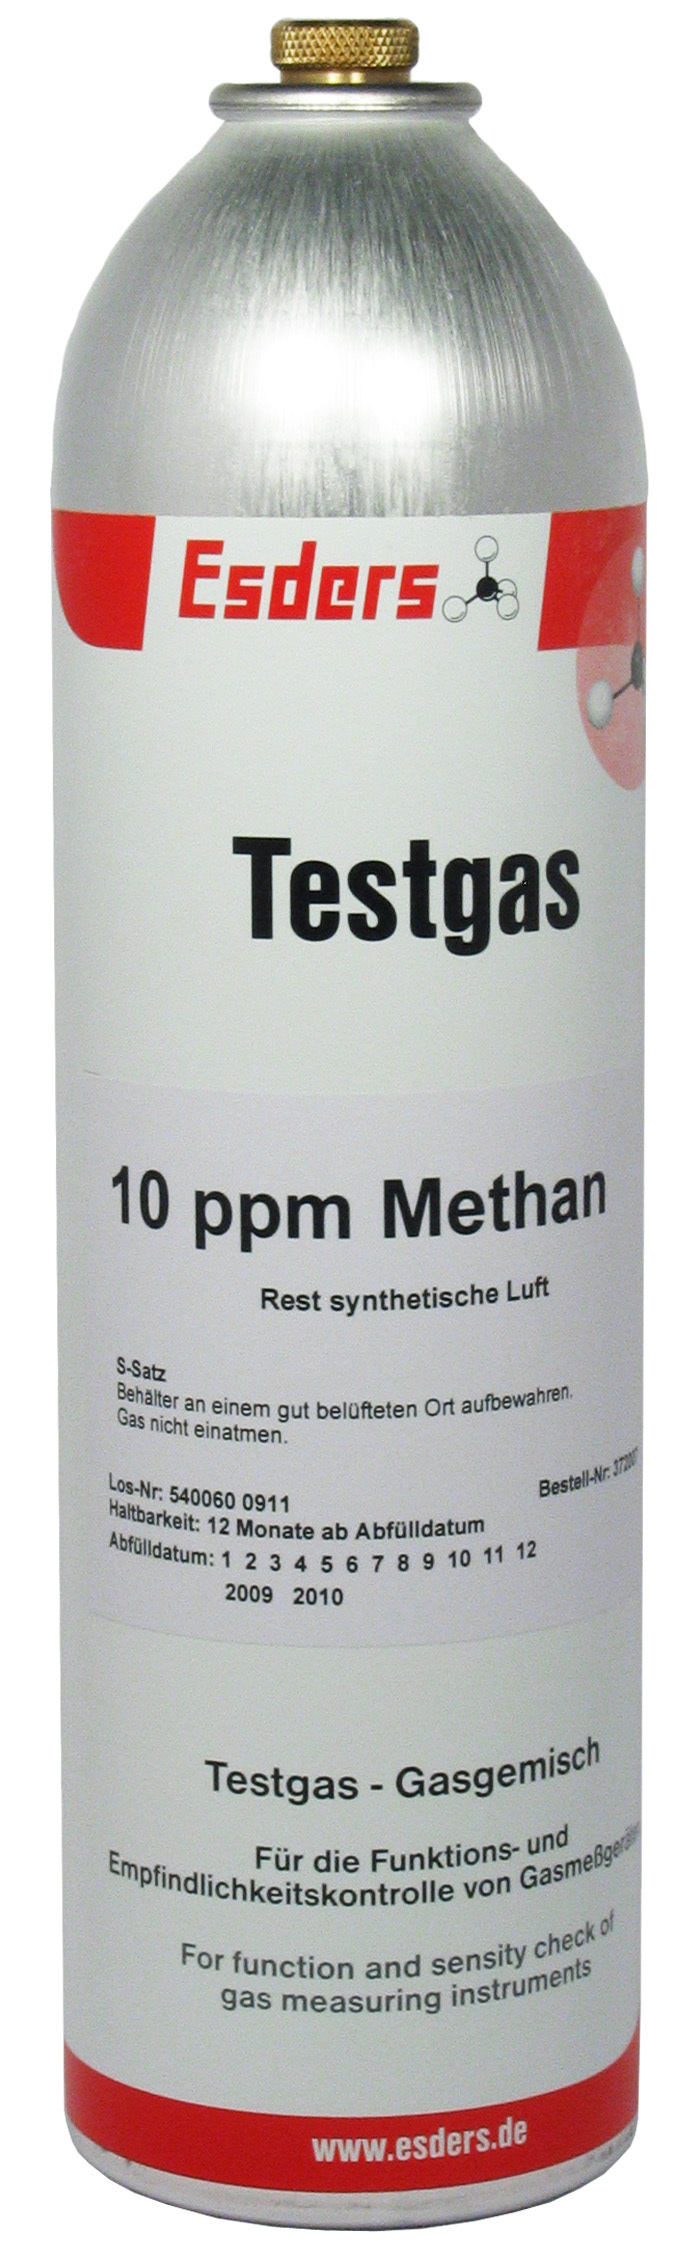 Testgas Methan 10 ppm - Solo 12